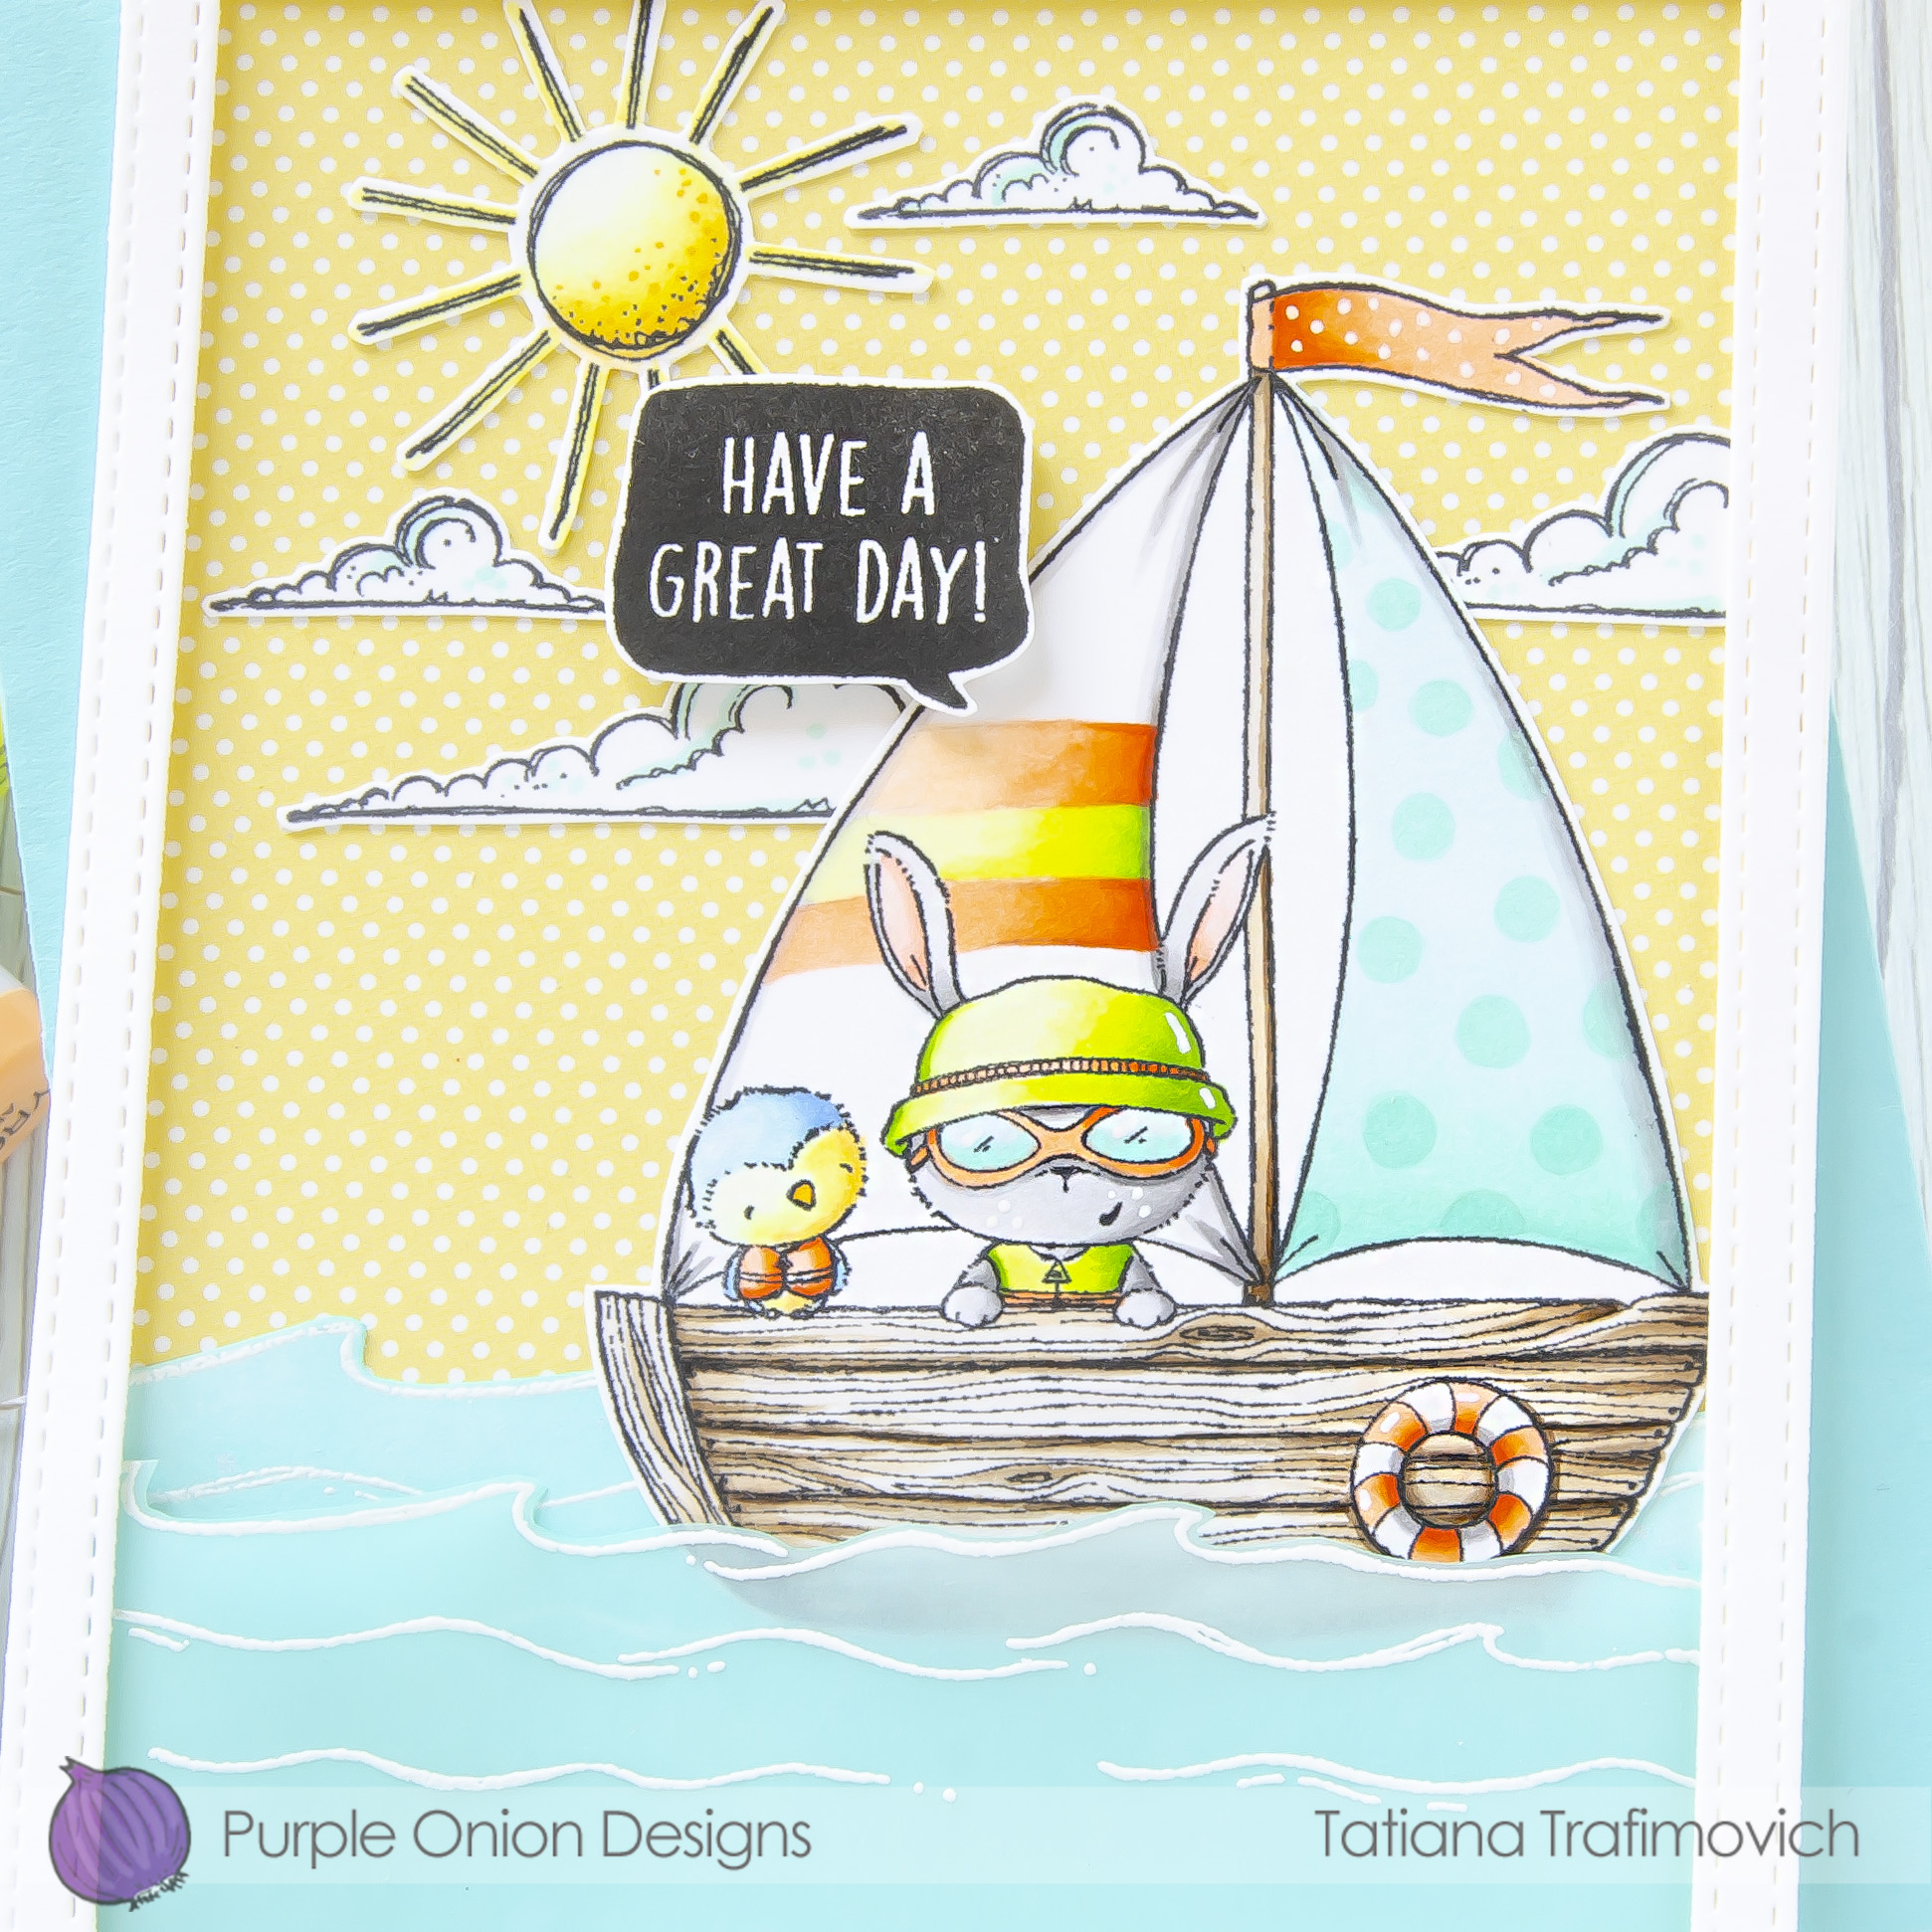 Have A Great Day! #handmade card by Tatiana Trafimovich #tatianacraftandart - stamps by Purple Onion Designs